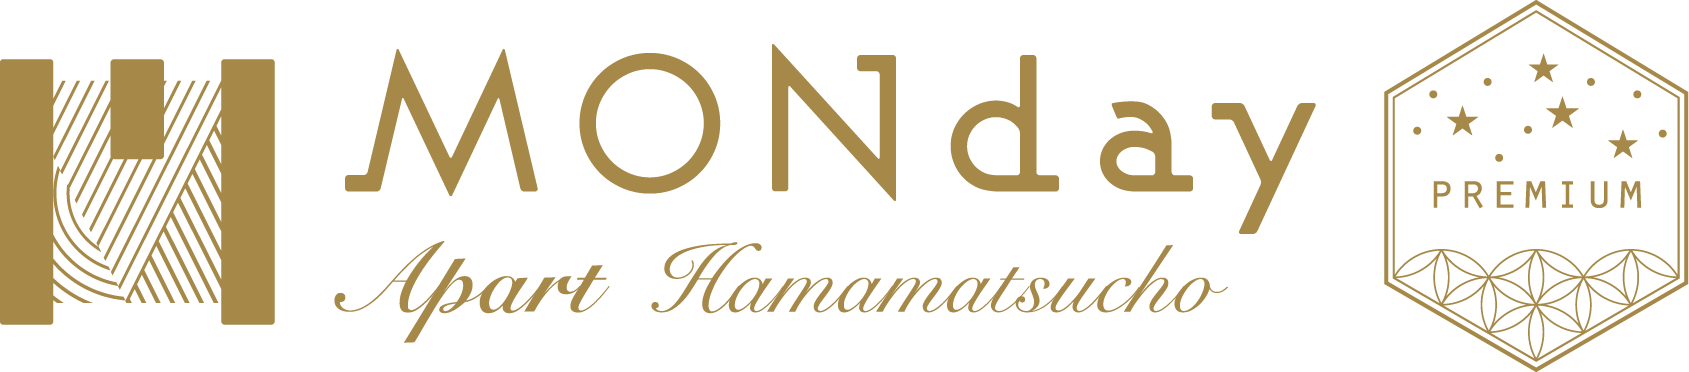 MONday Apart Premium Hamamatsucho(Former:GATE STAY PREMIUM HAMAMATSUCHO)